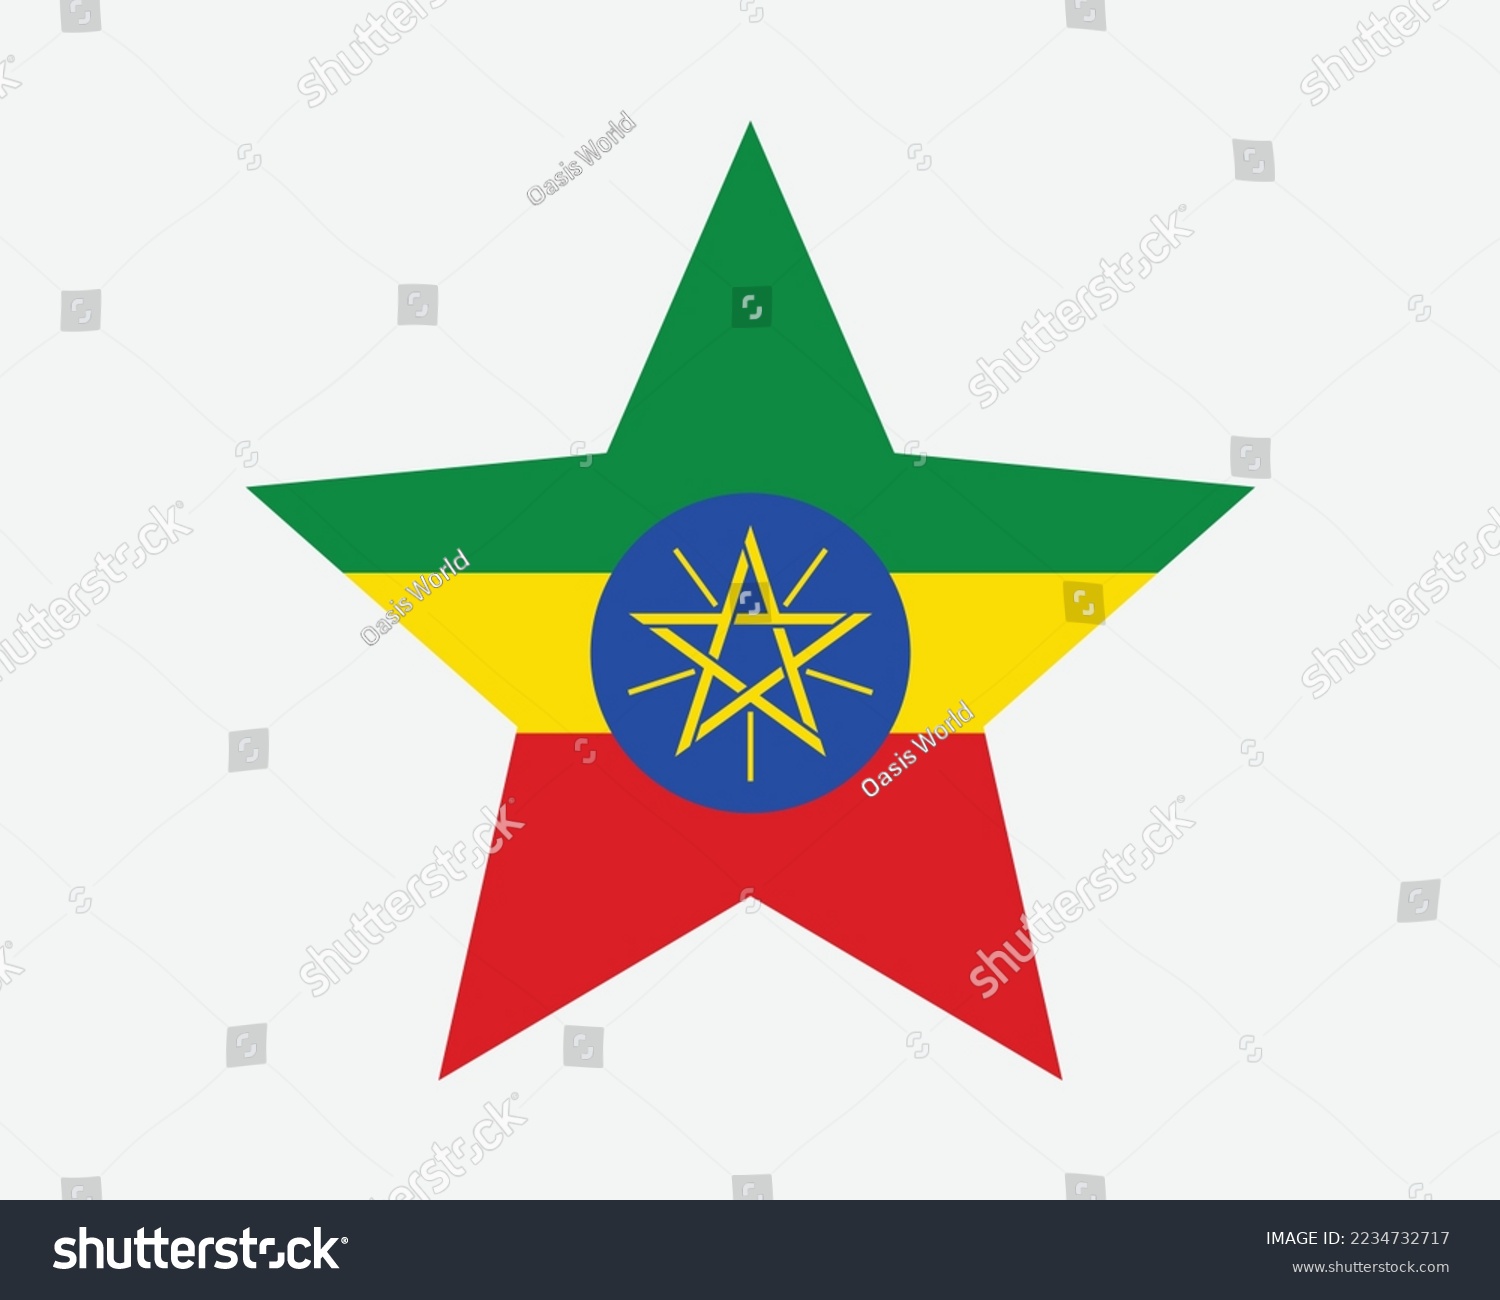 SVG of Ethiopia Star Flag. Ethiopian Star Shape Flag. Country National Banner Icon Symbol Vector Flat Artwork Graphic Illustration svg